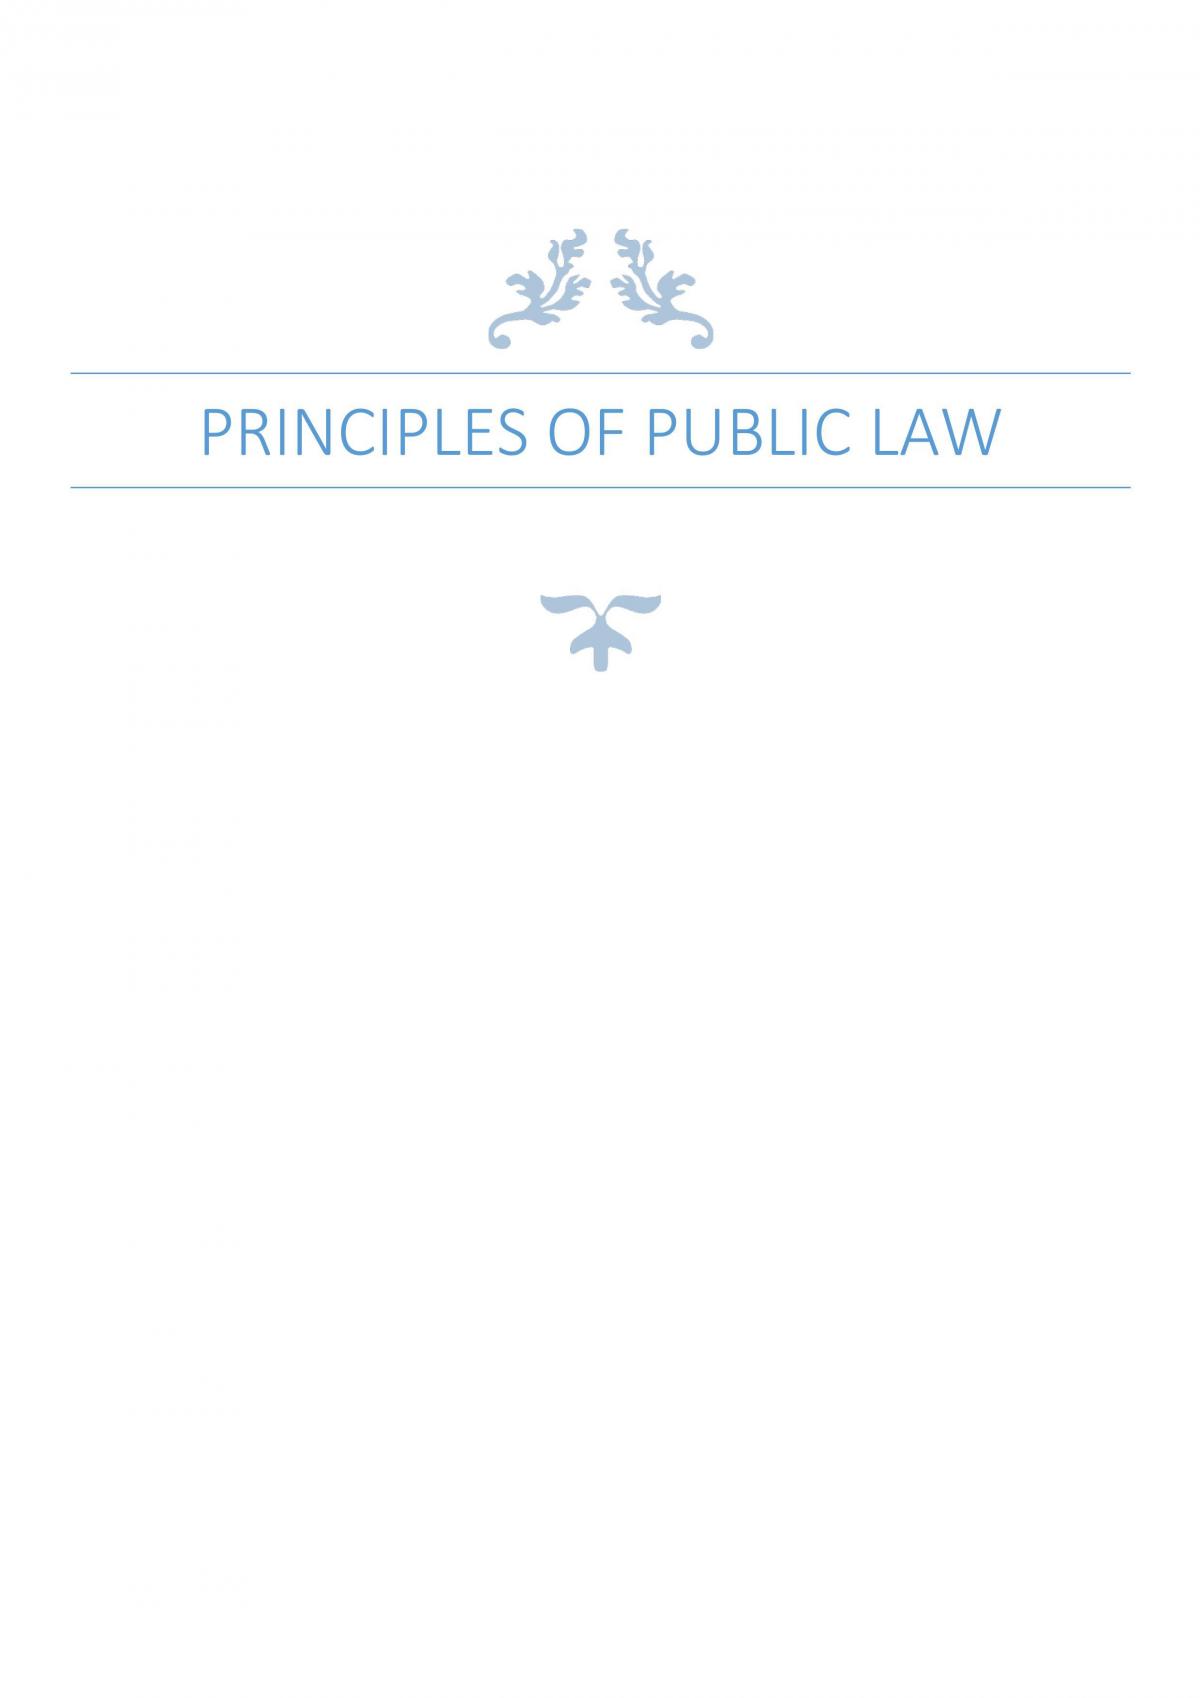 Principles of Public Law Exam Notes - Page 1